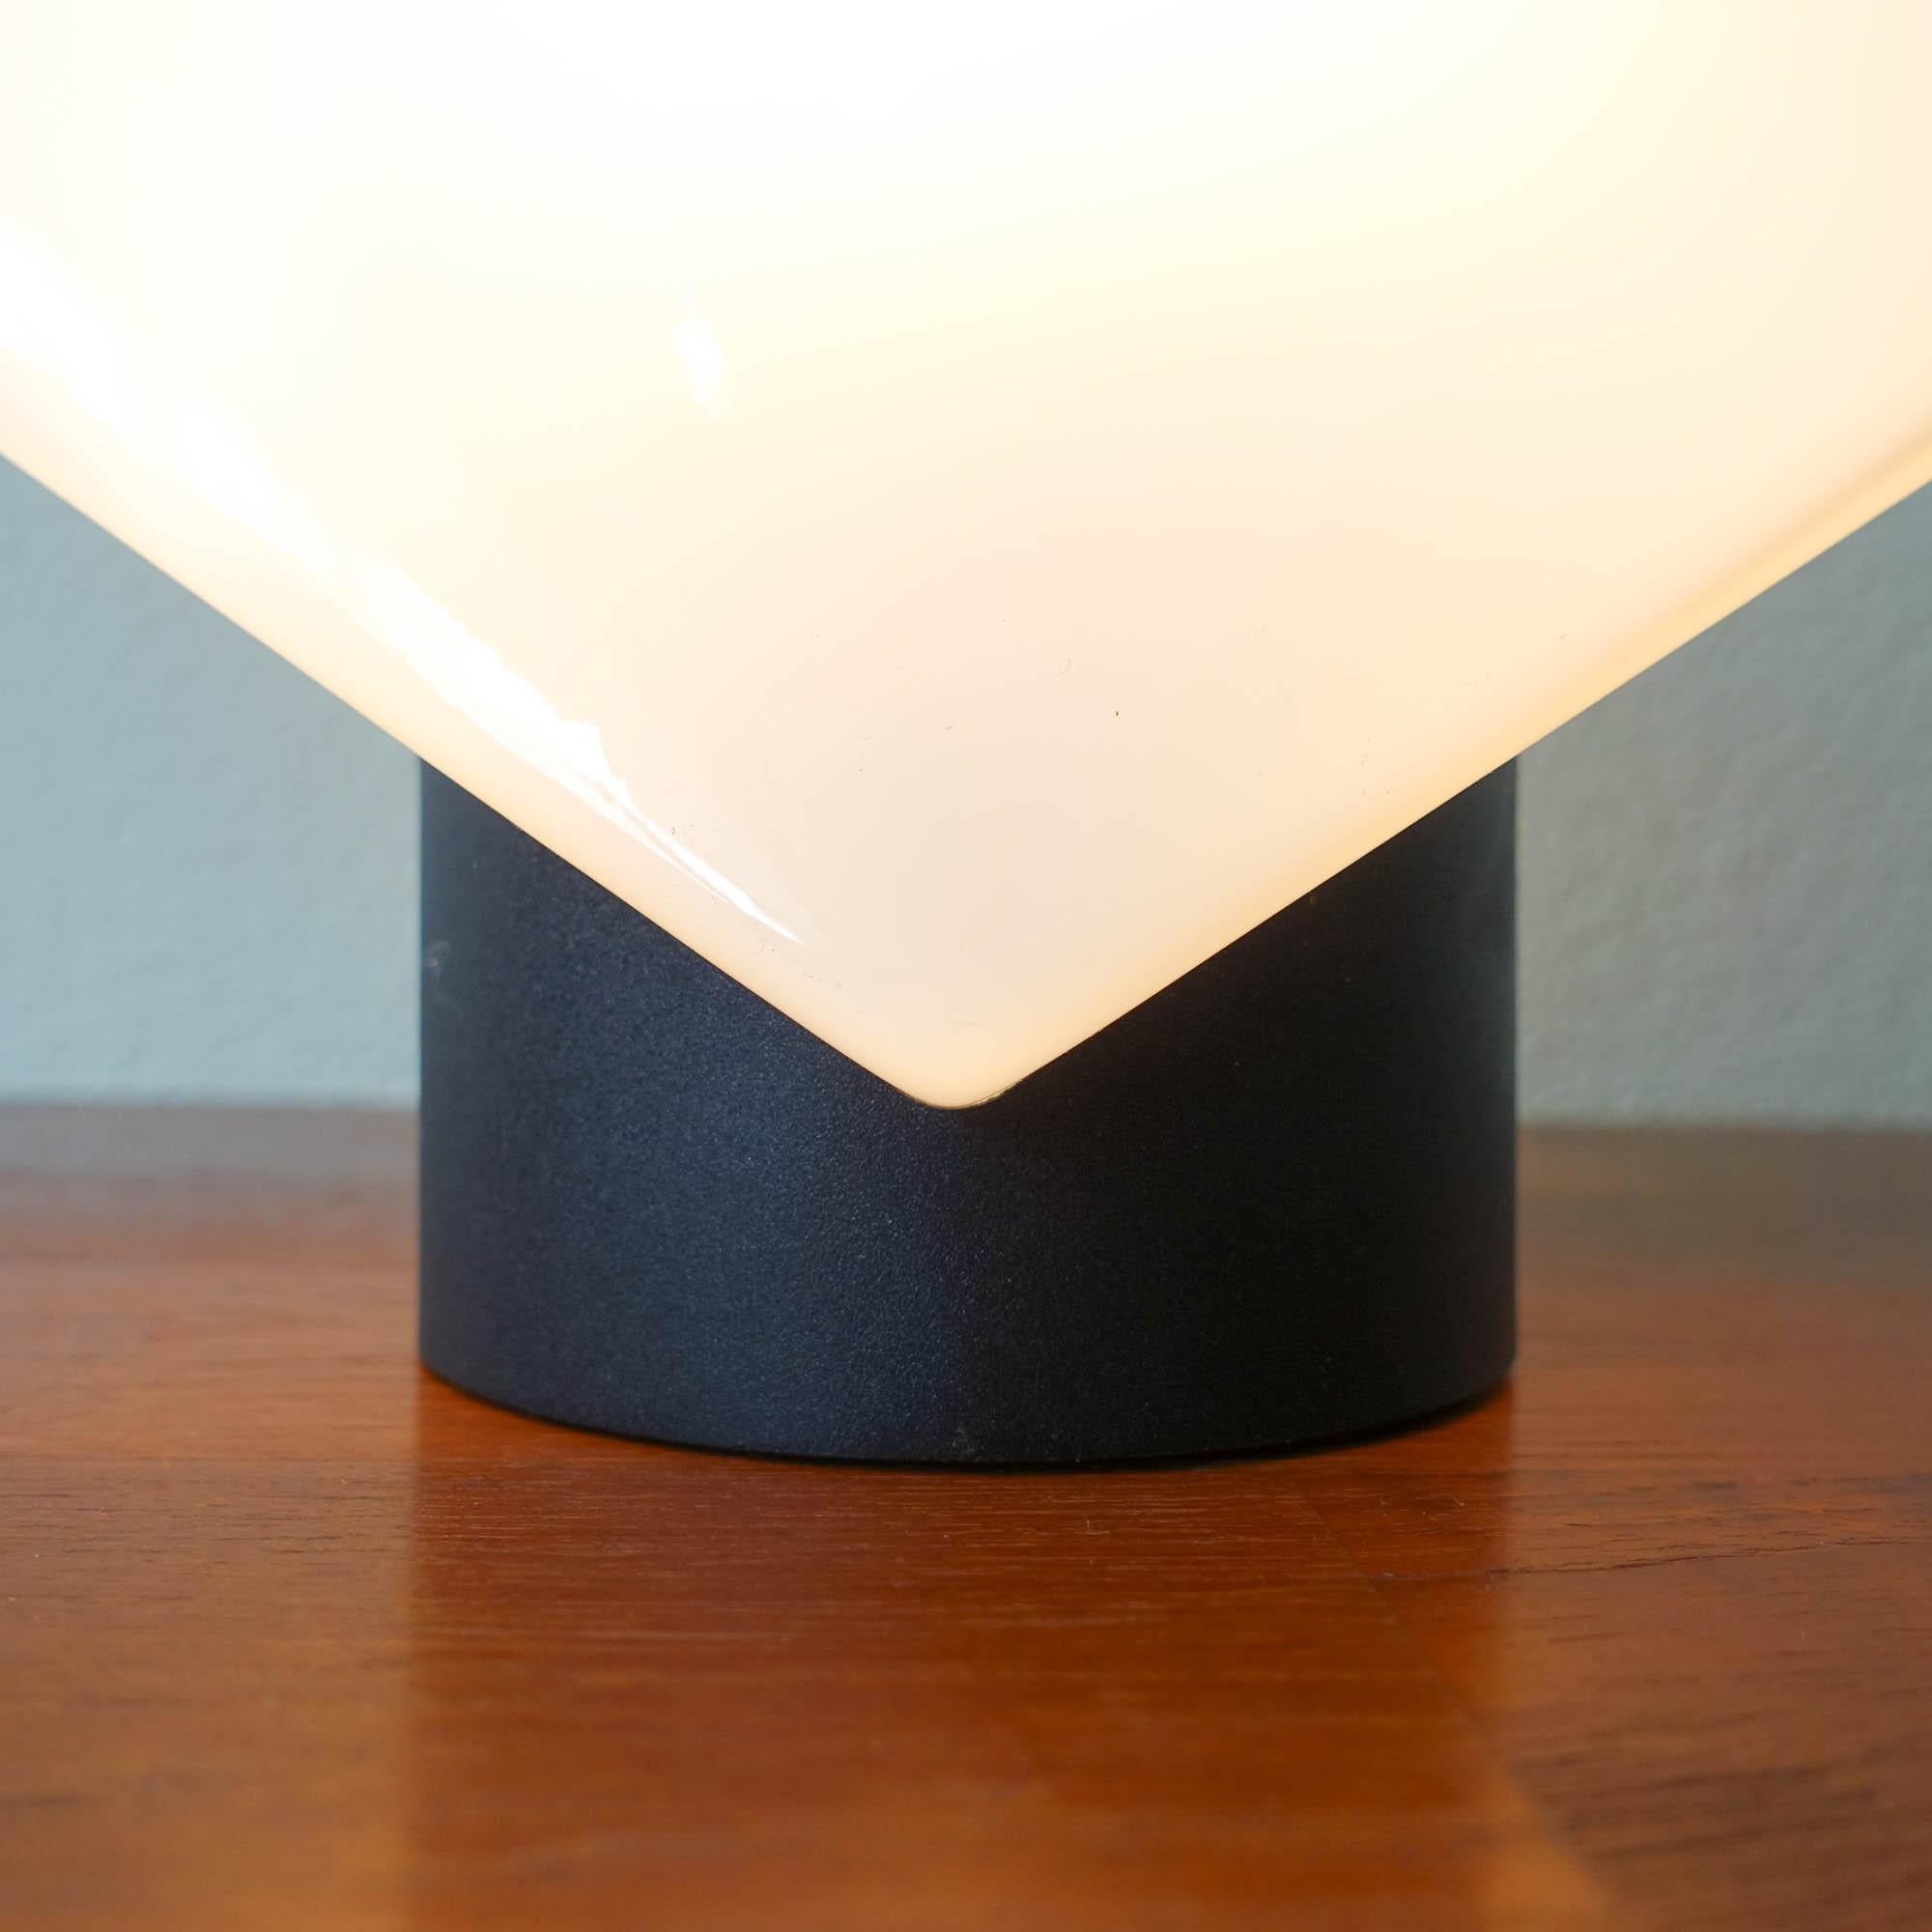 Fan-Shaped AV Mazzega Murano Glass Table Lamp, 1970s For Sale 8